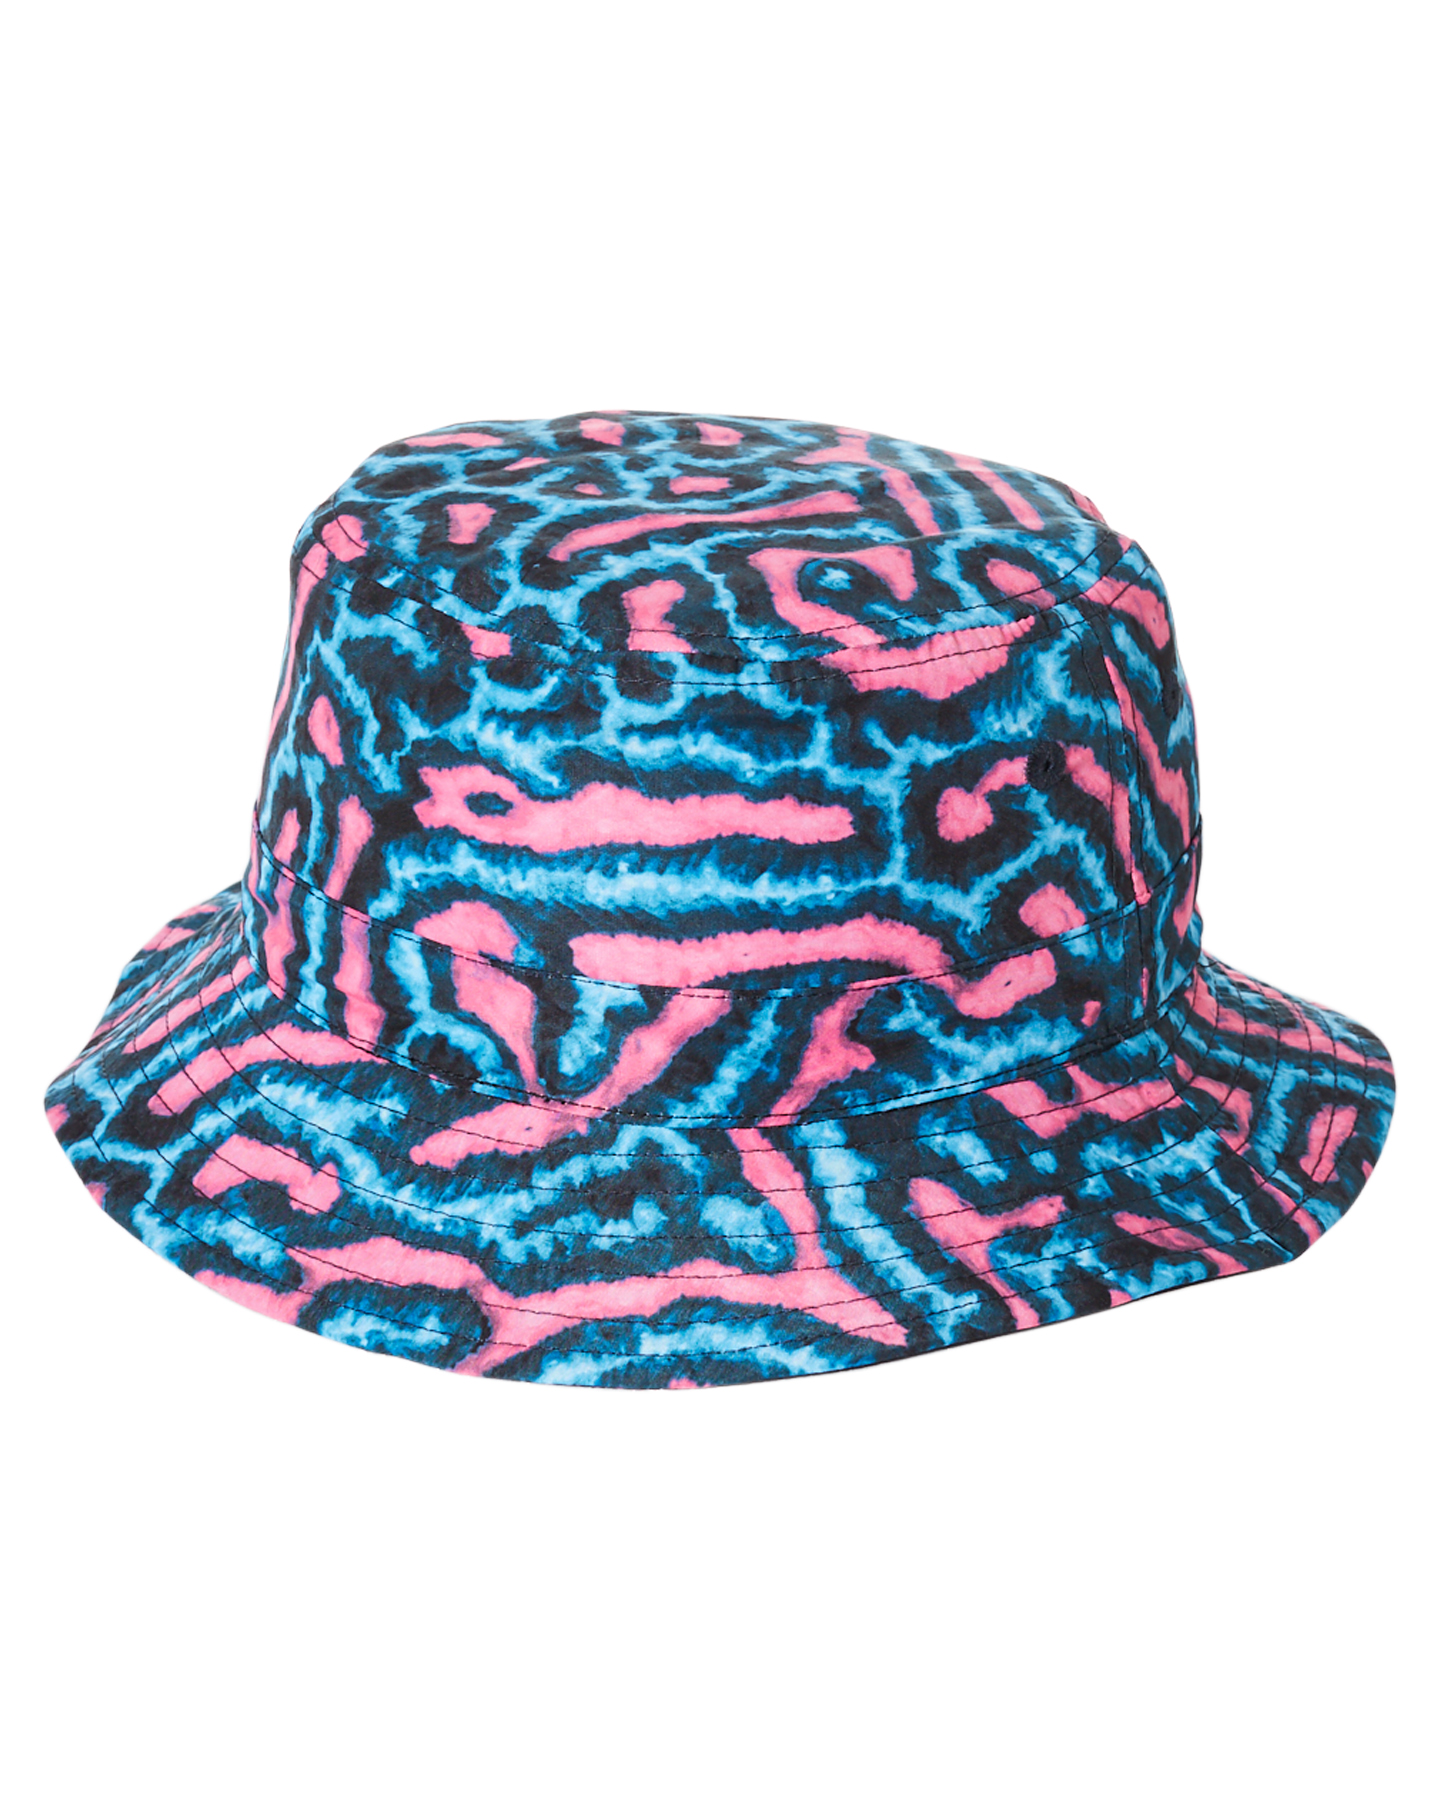 Volcom Coral Morph Bucket Hat - Black | SurfStitch